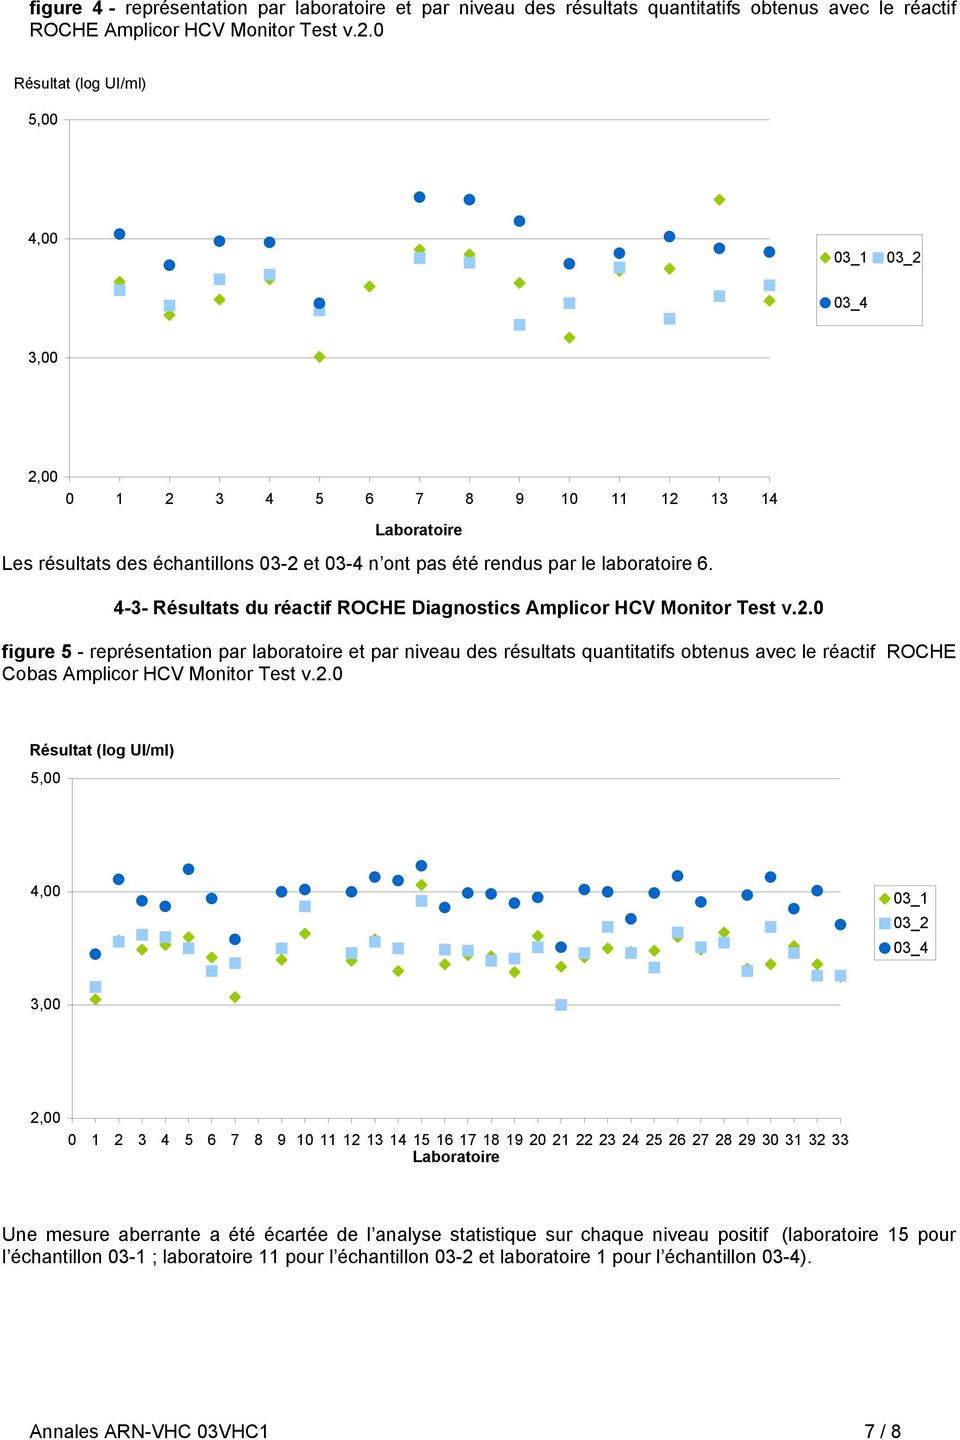 4-3- Résultats du réactif ROCHE Diagnostics Amplicor HCV Monitor Test v.2.